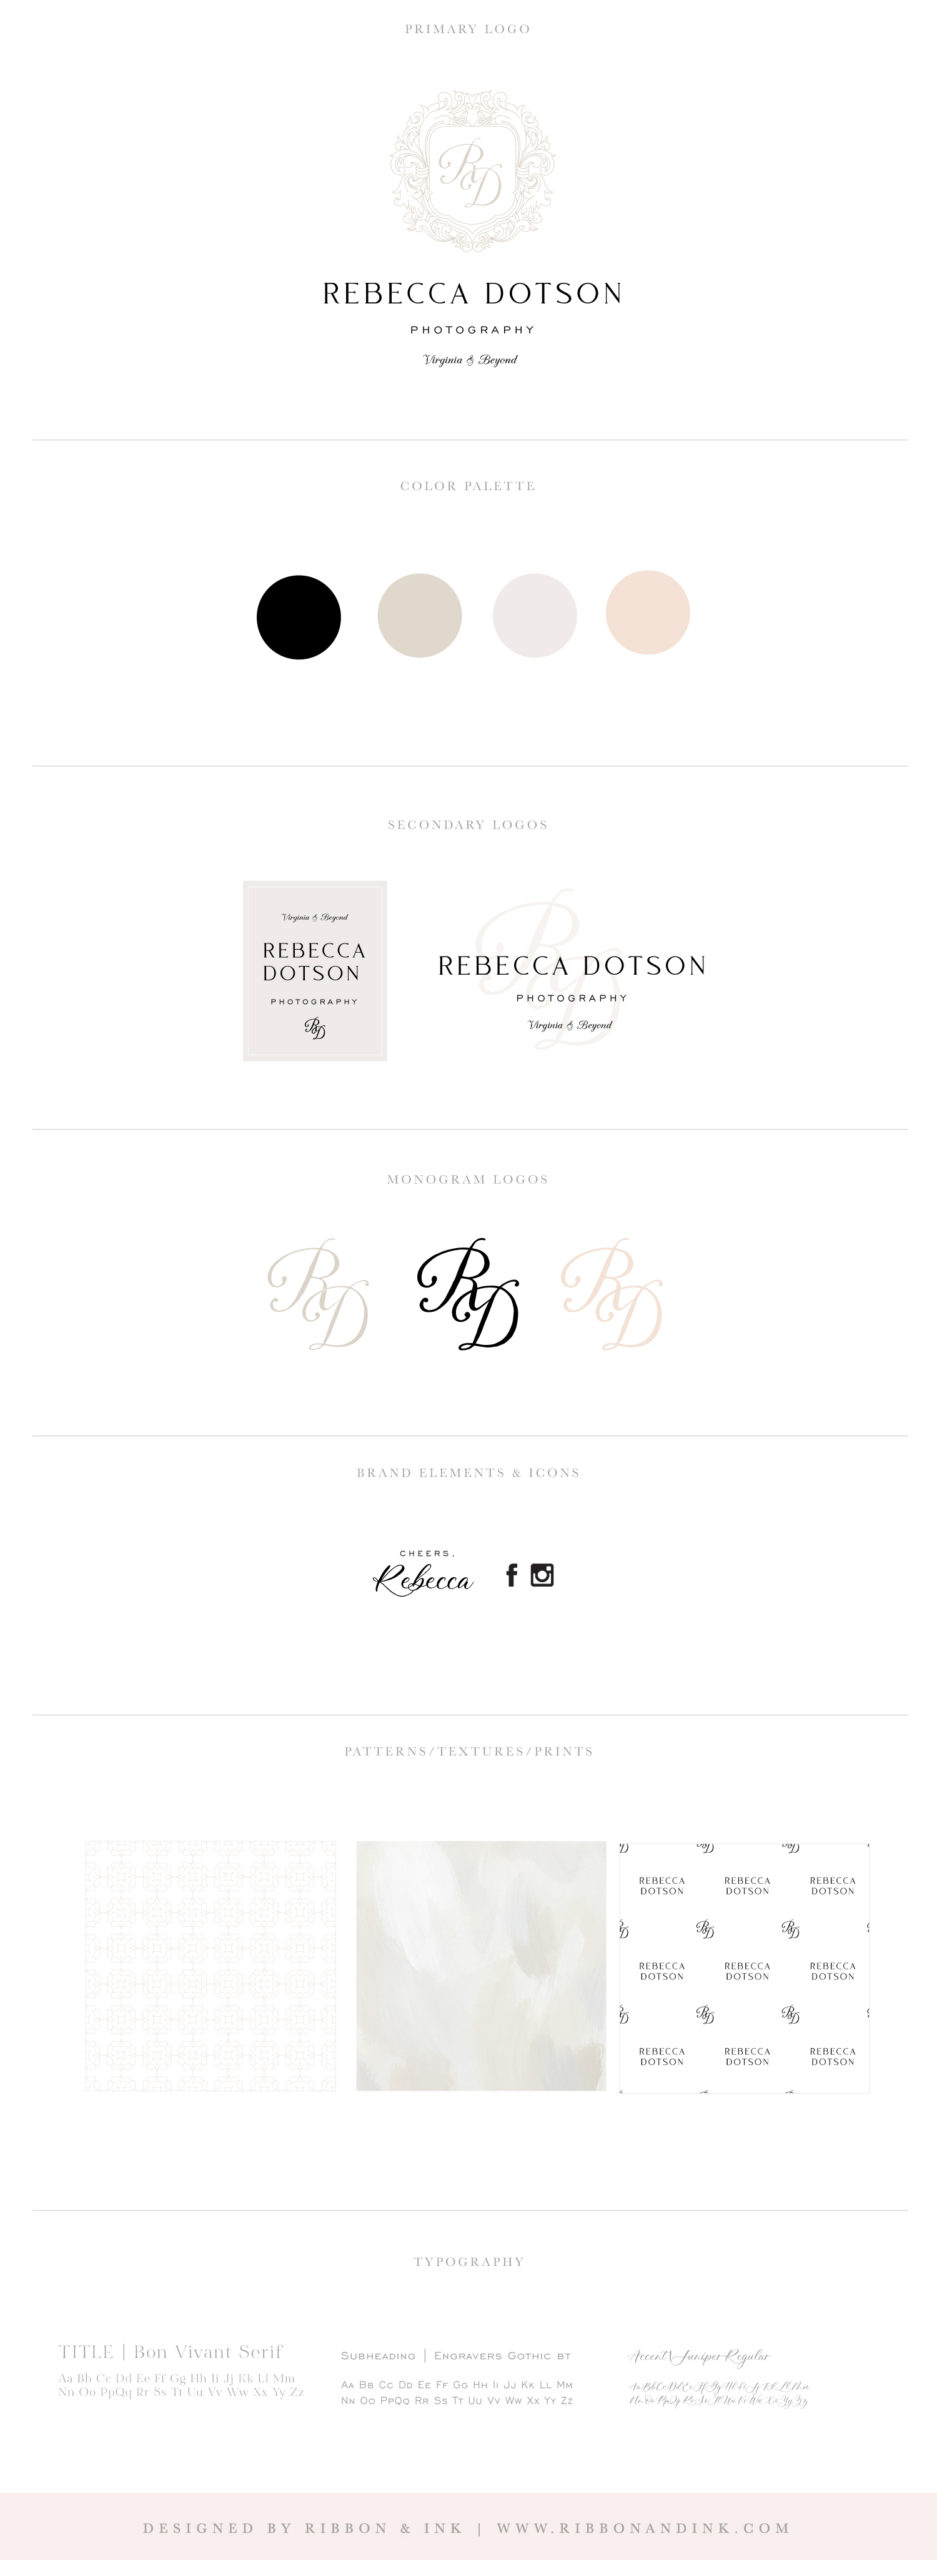 brand board / branding identity / logo for wedding photographers / branding for creatives and wedding businesses / fine art 